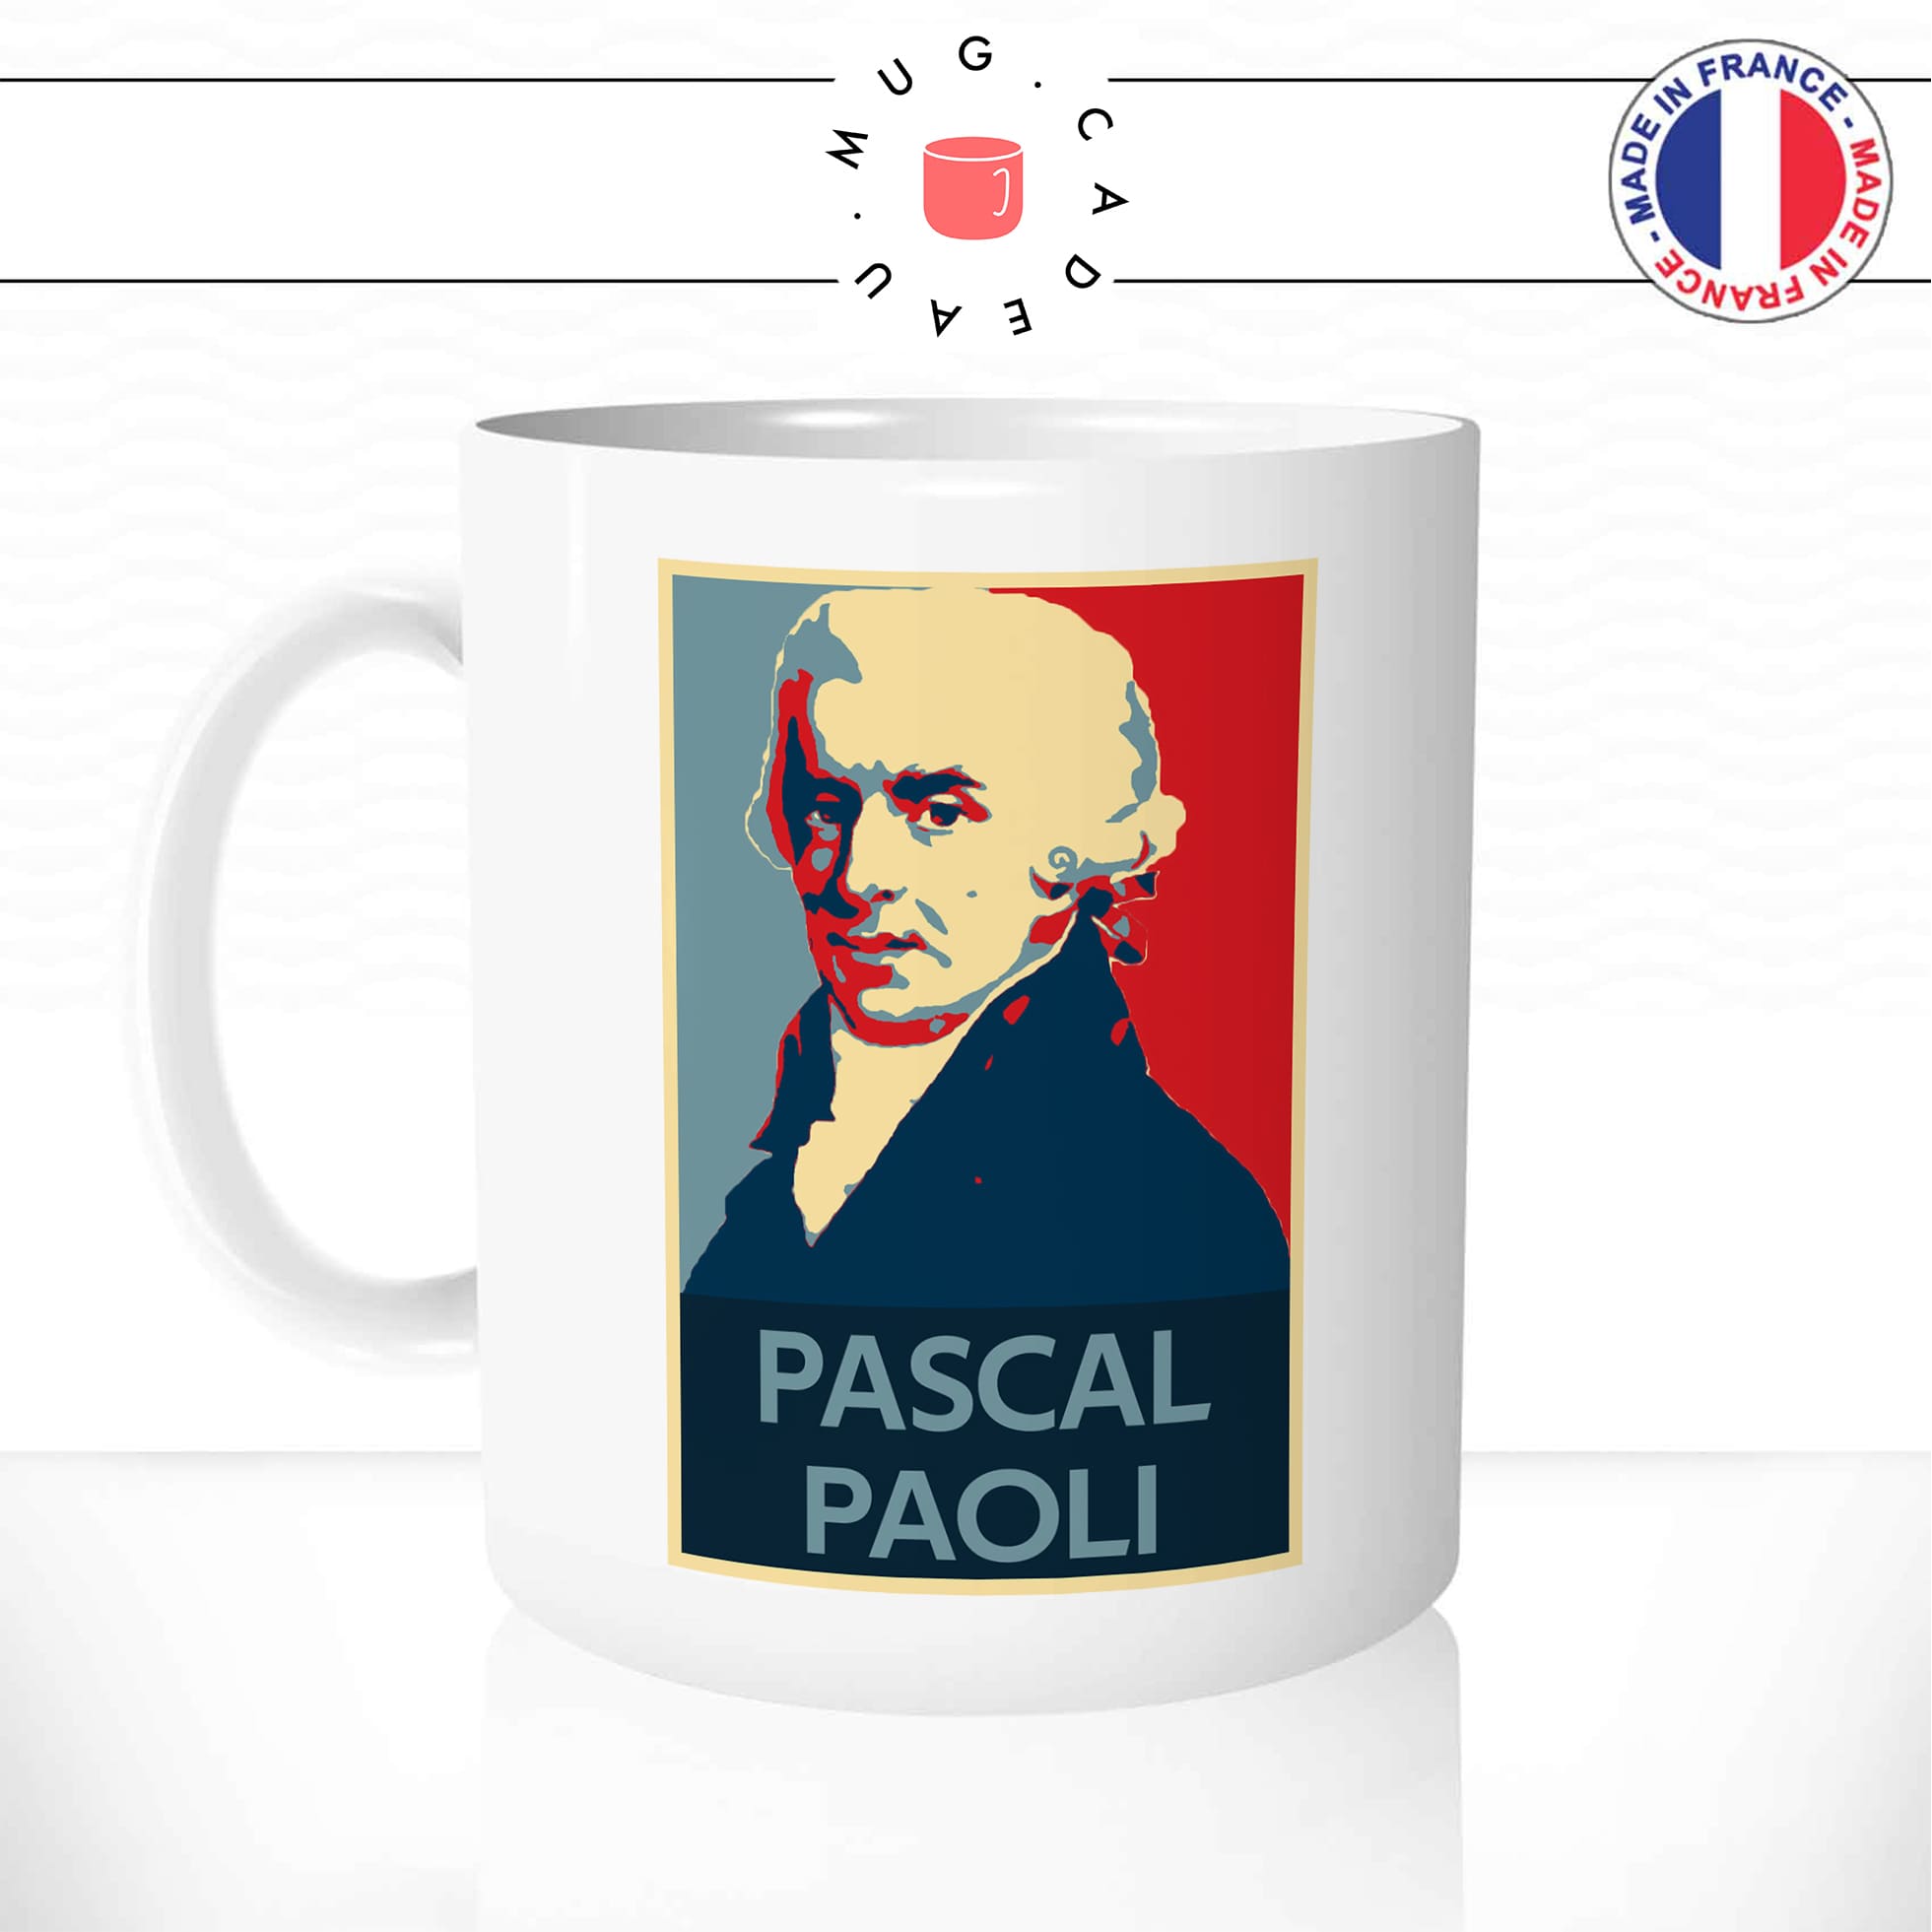 mug-tasse-blanc-brillant-pascal-paoli-pasquale-corse-corsica-corsu-homme-histoire-empereur-france-propagande-idée-cadeau-originale-fun